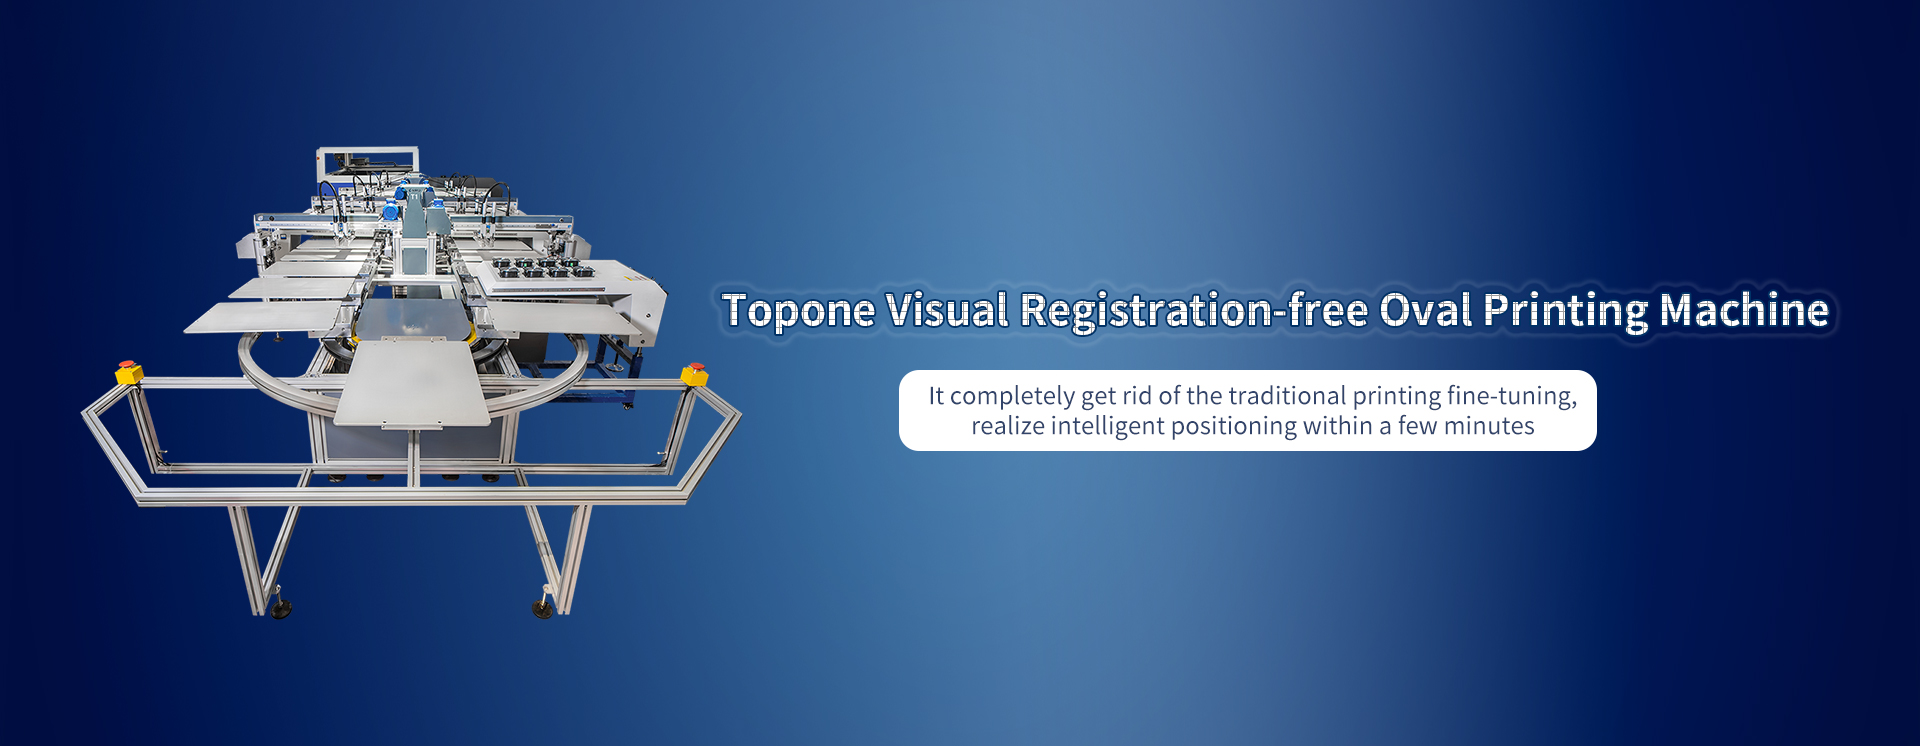 Topone Visual Registration-free Oval Printing Machine